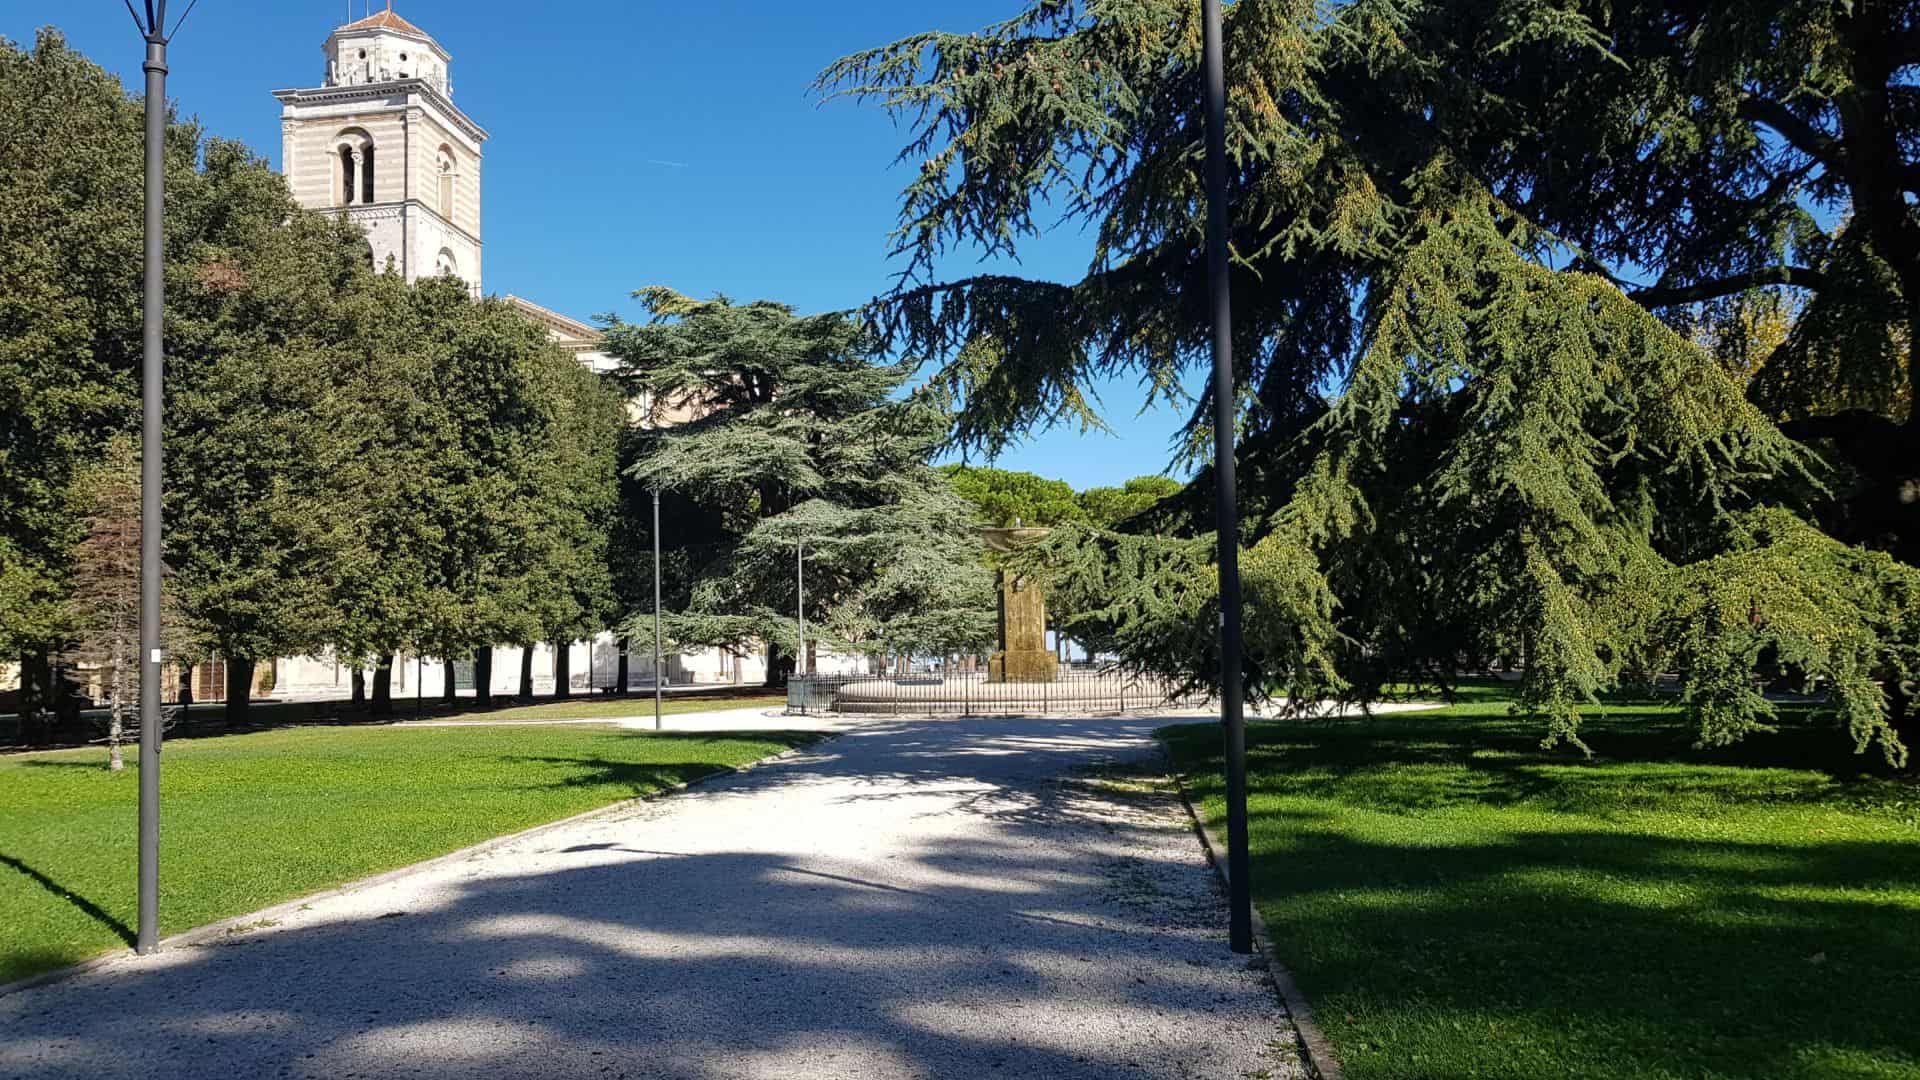 Der grifalco park in Fermo (bildquelle: educattivo)